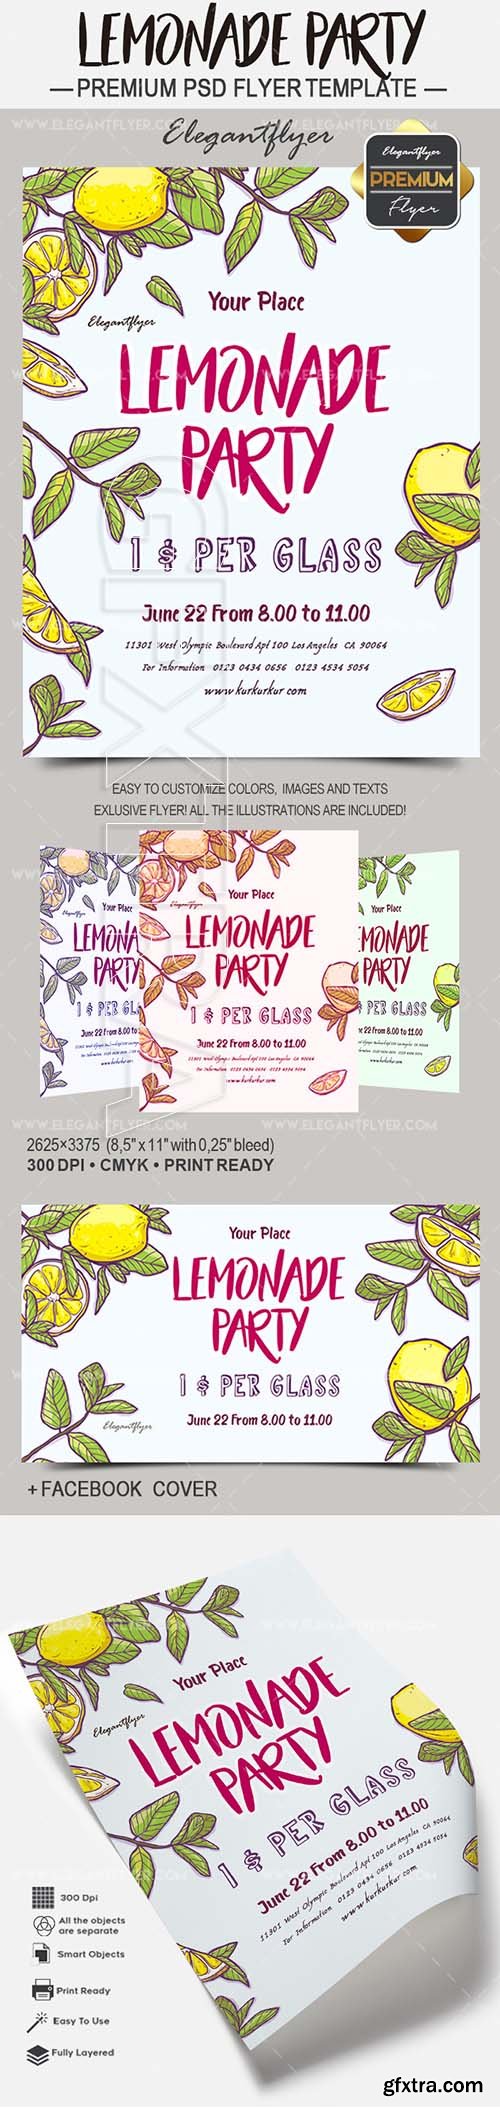 Lemonade Party Flyer Template